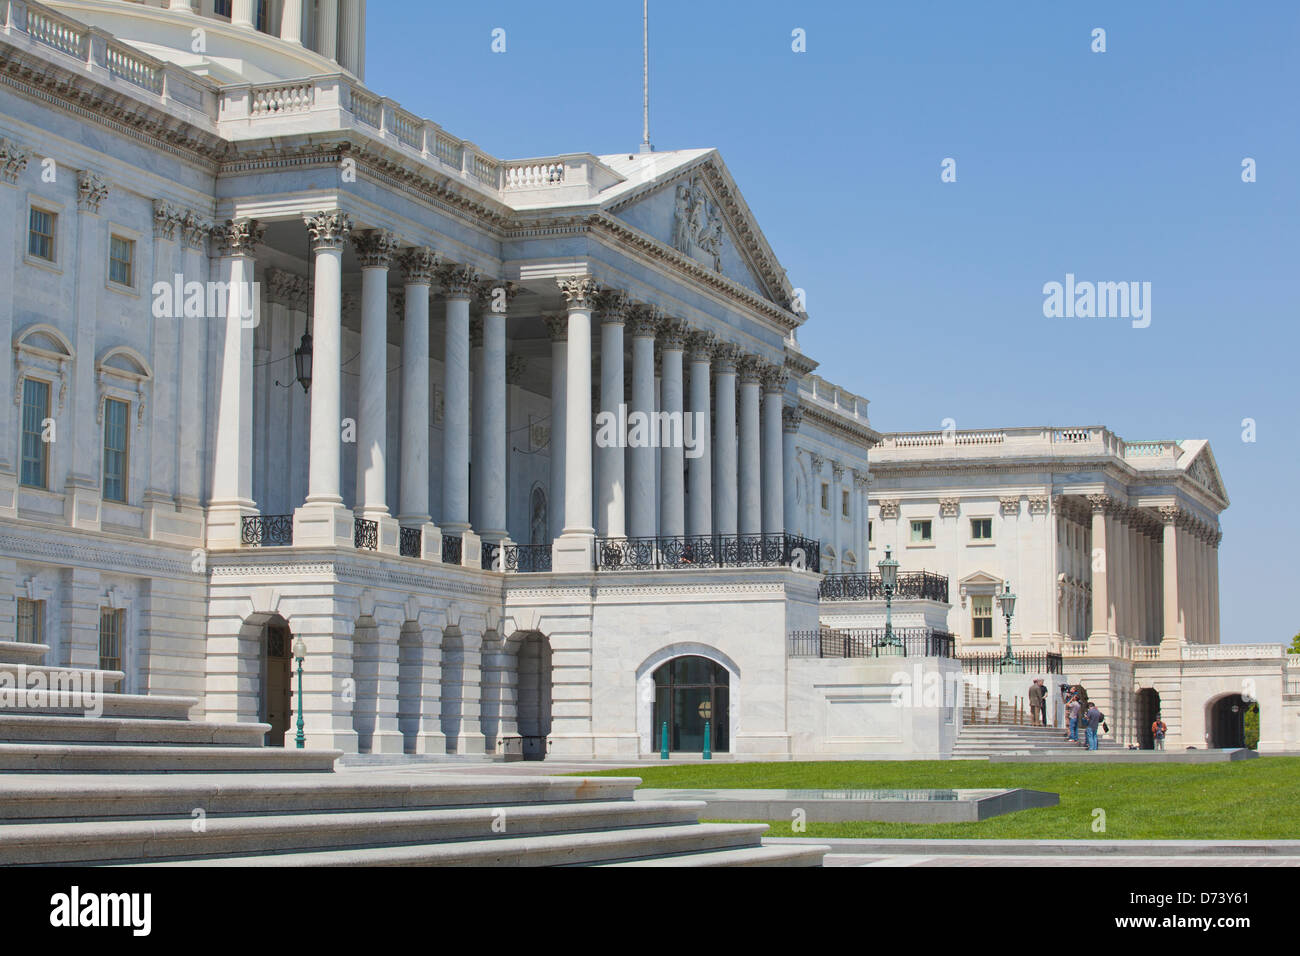 East facade of US Capitol building - Washington, DC USA Stock Photo